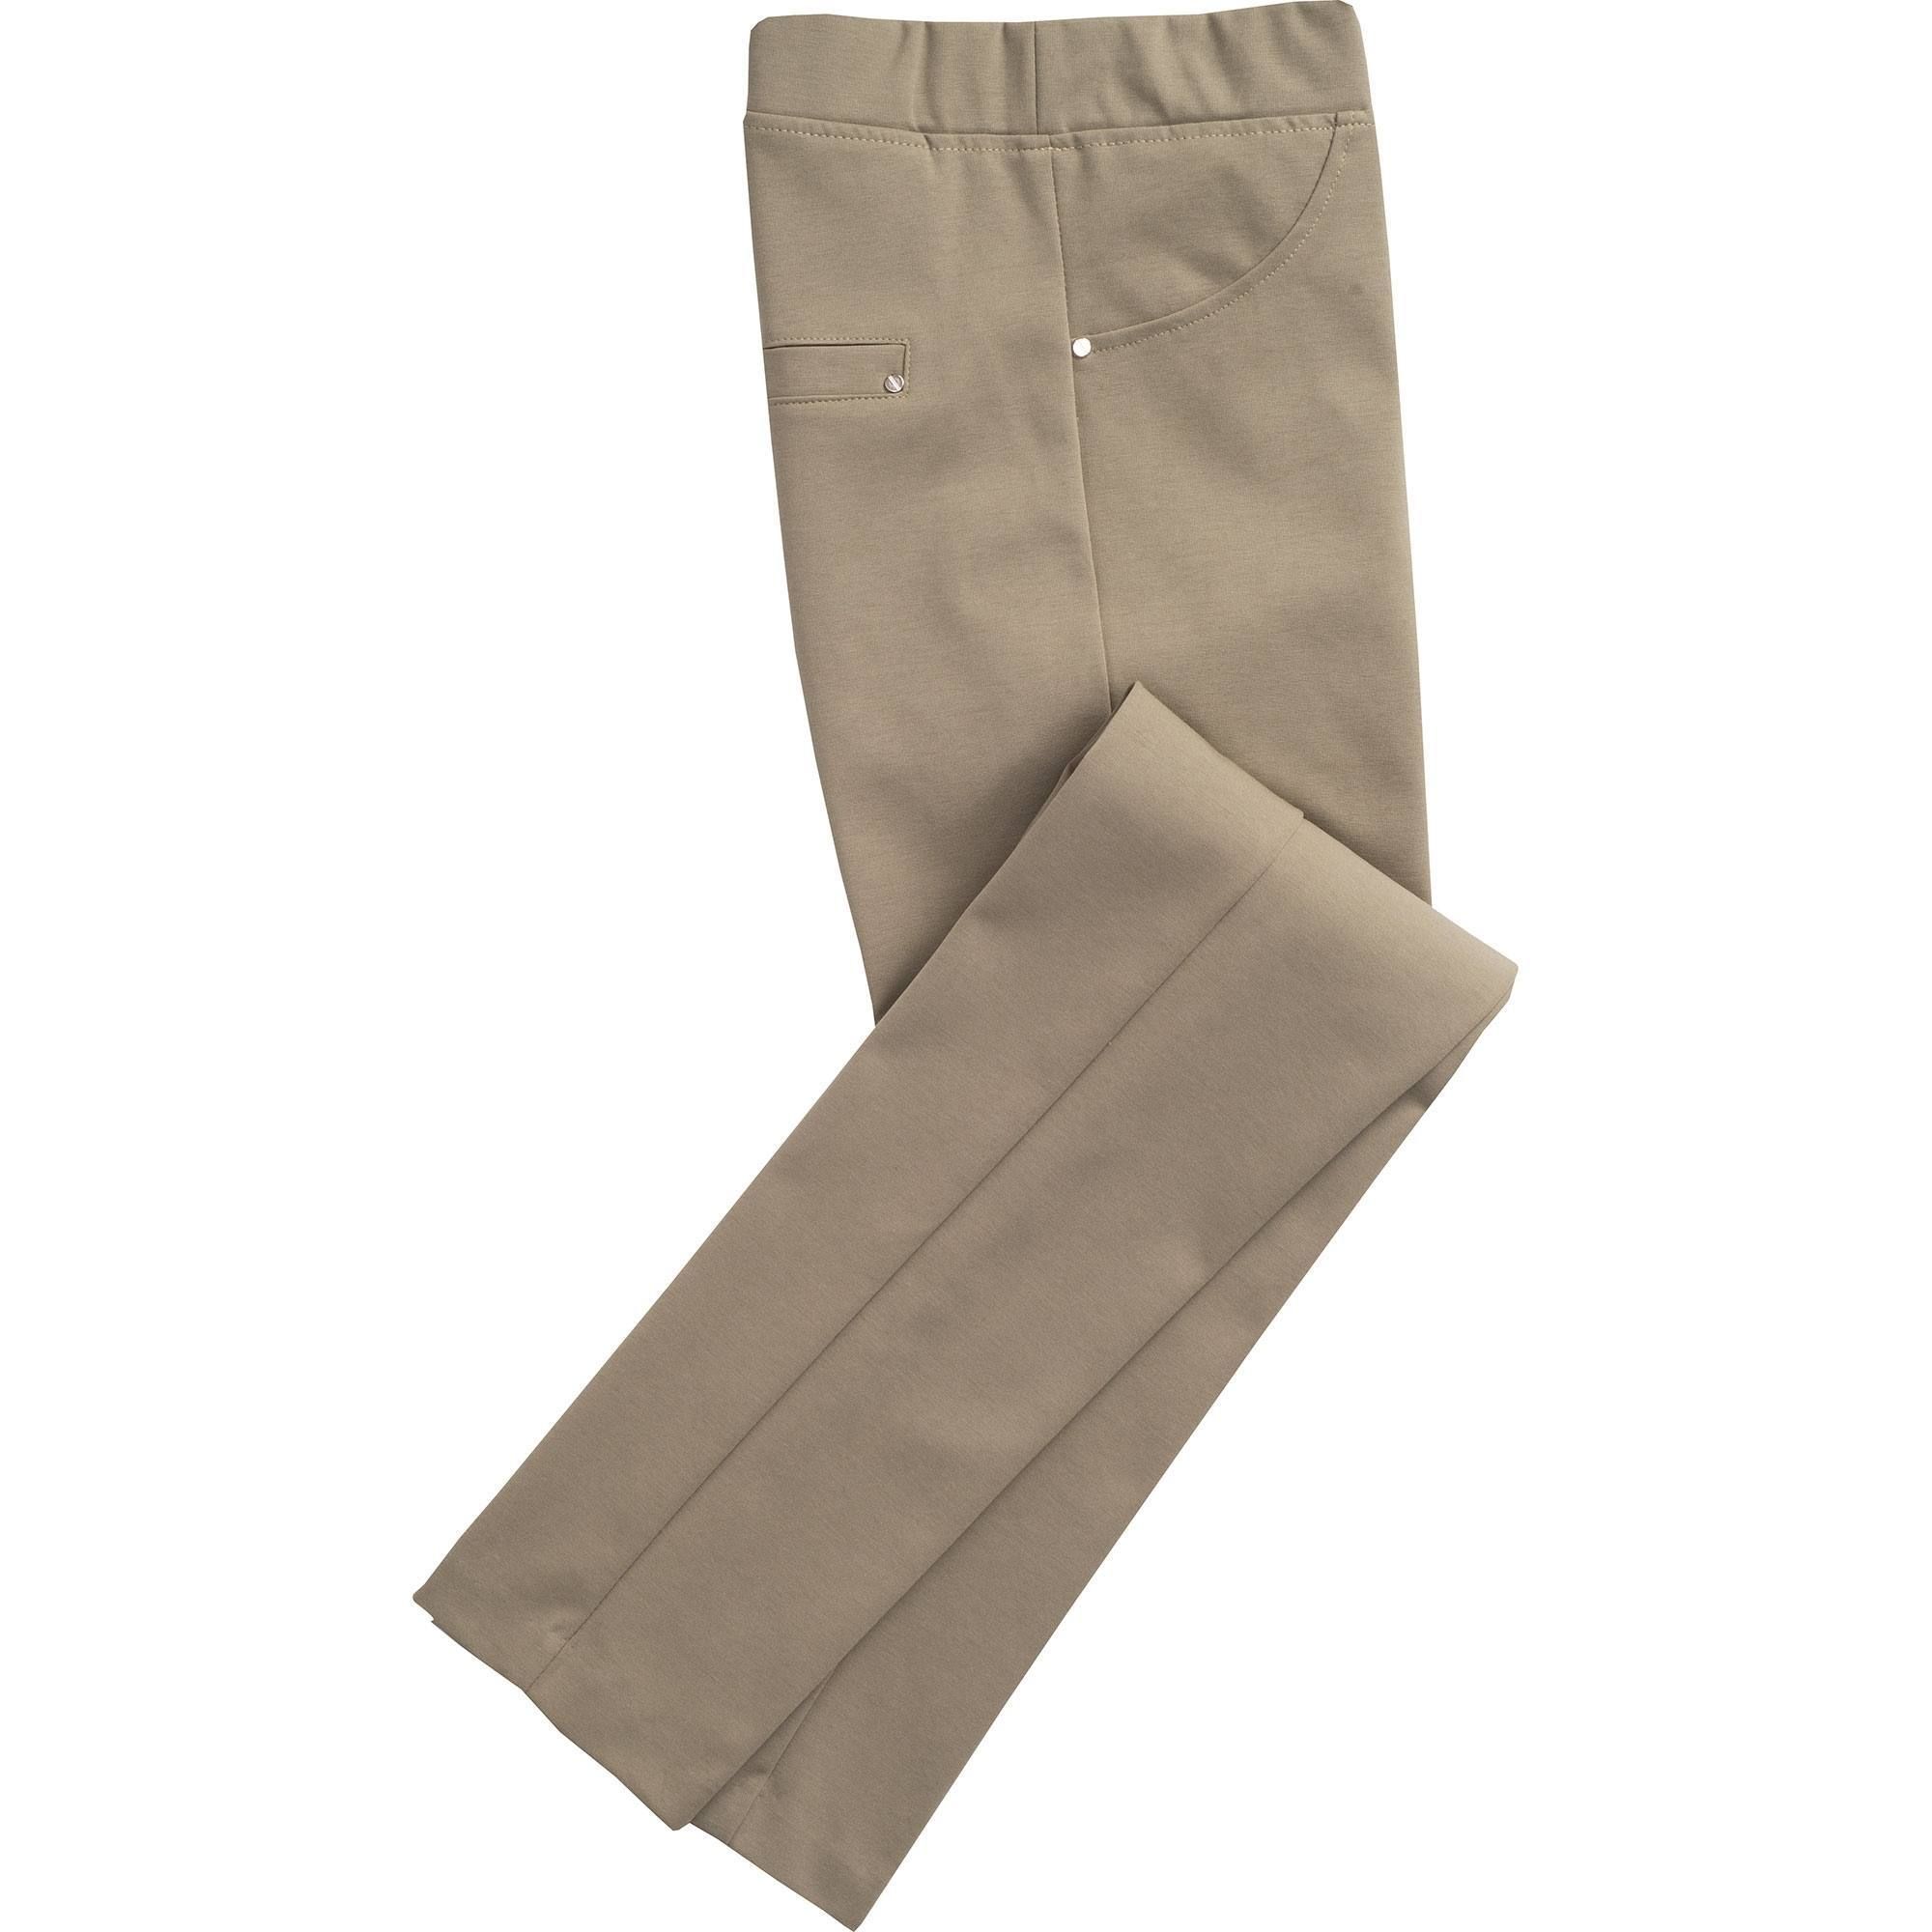 FTCayanz Women's Corduroy Cotton Trousers Elastic Waist Casual Pants Trousers